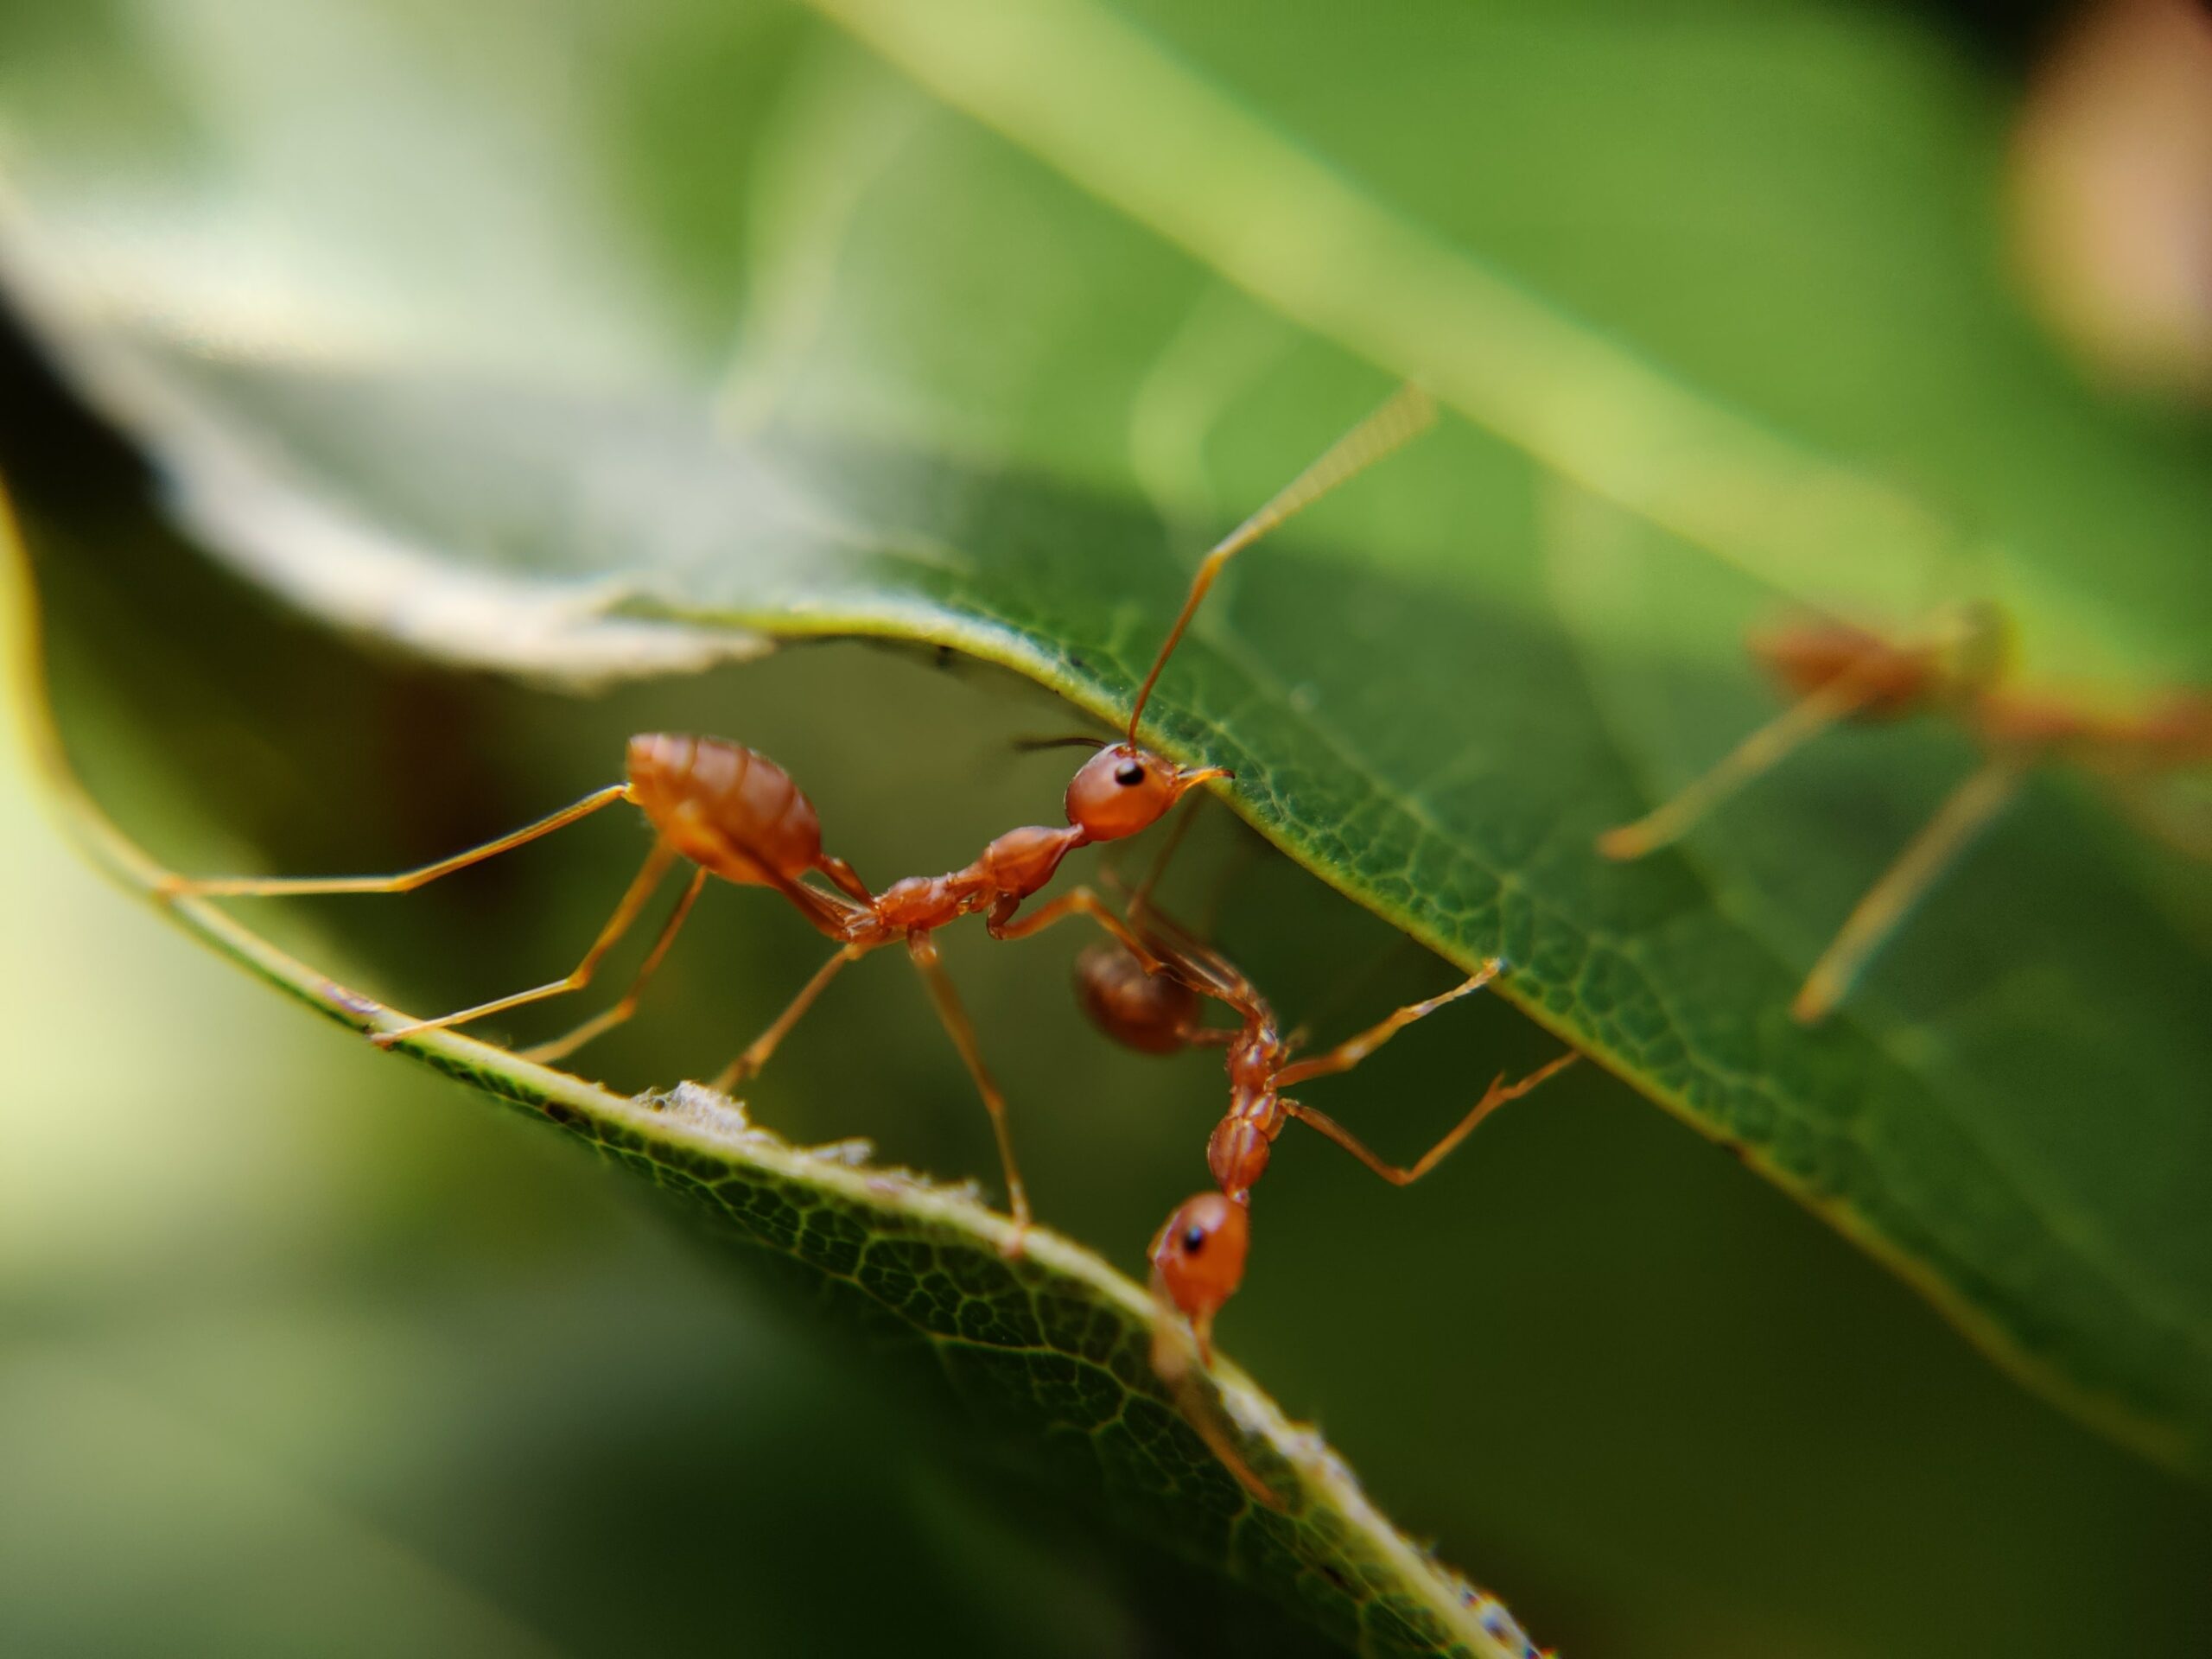 ants removal Edmonton and pest control Edmonton, how to prevent ants Edmonton